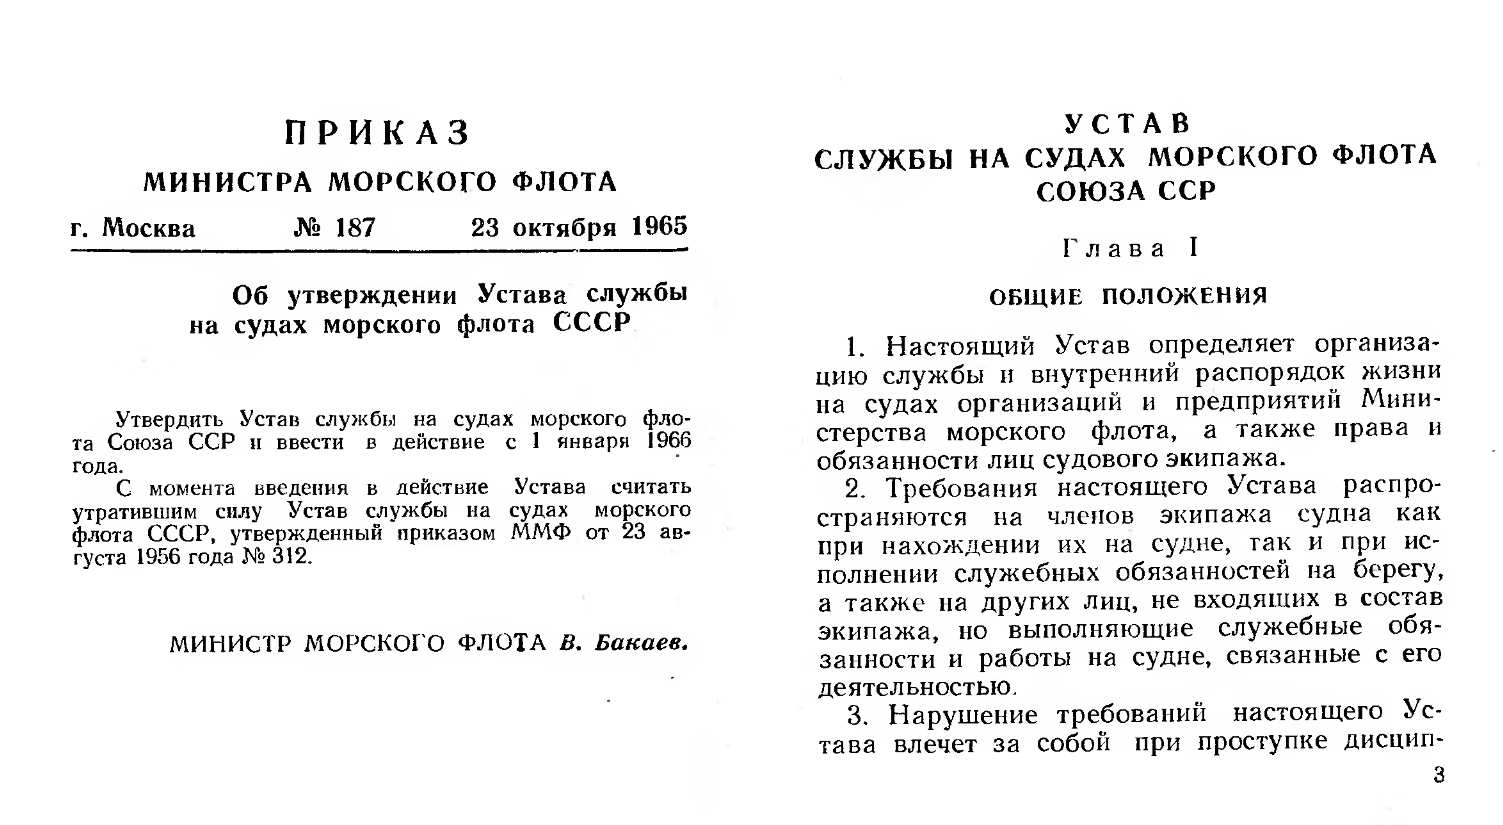 Устав службы на судах морского флота Союза ССР. 1966